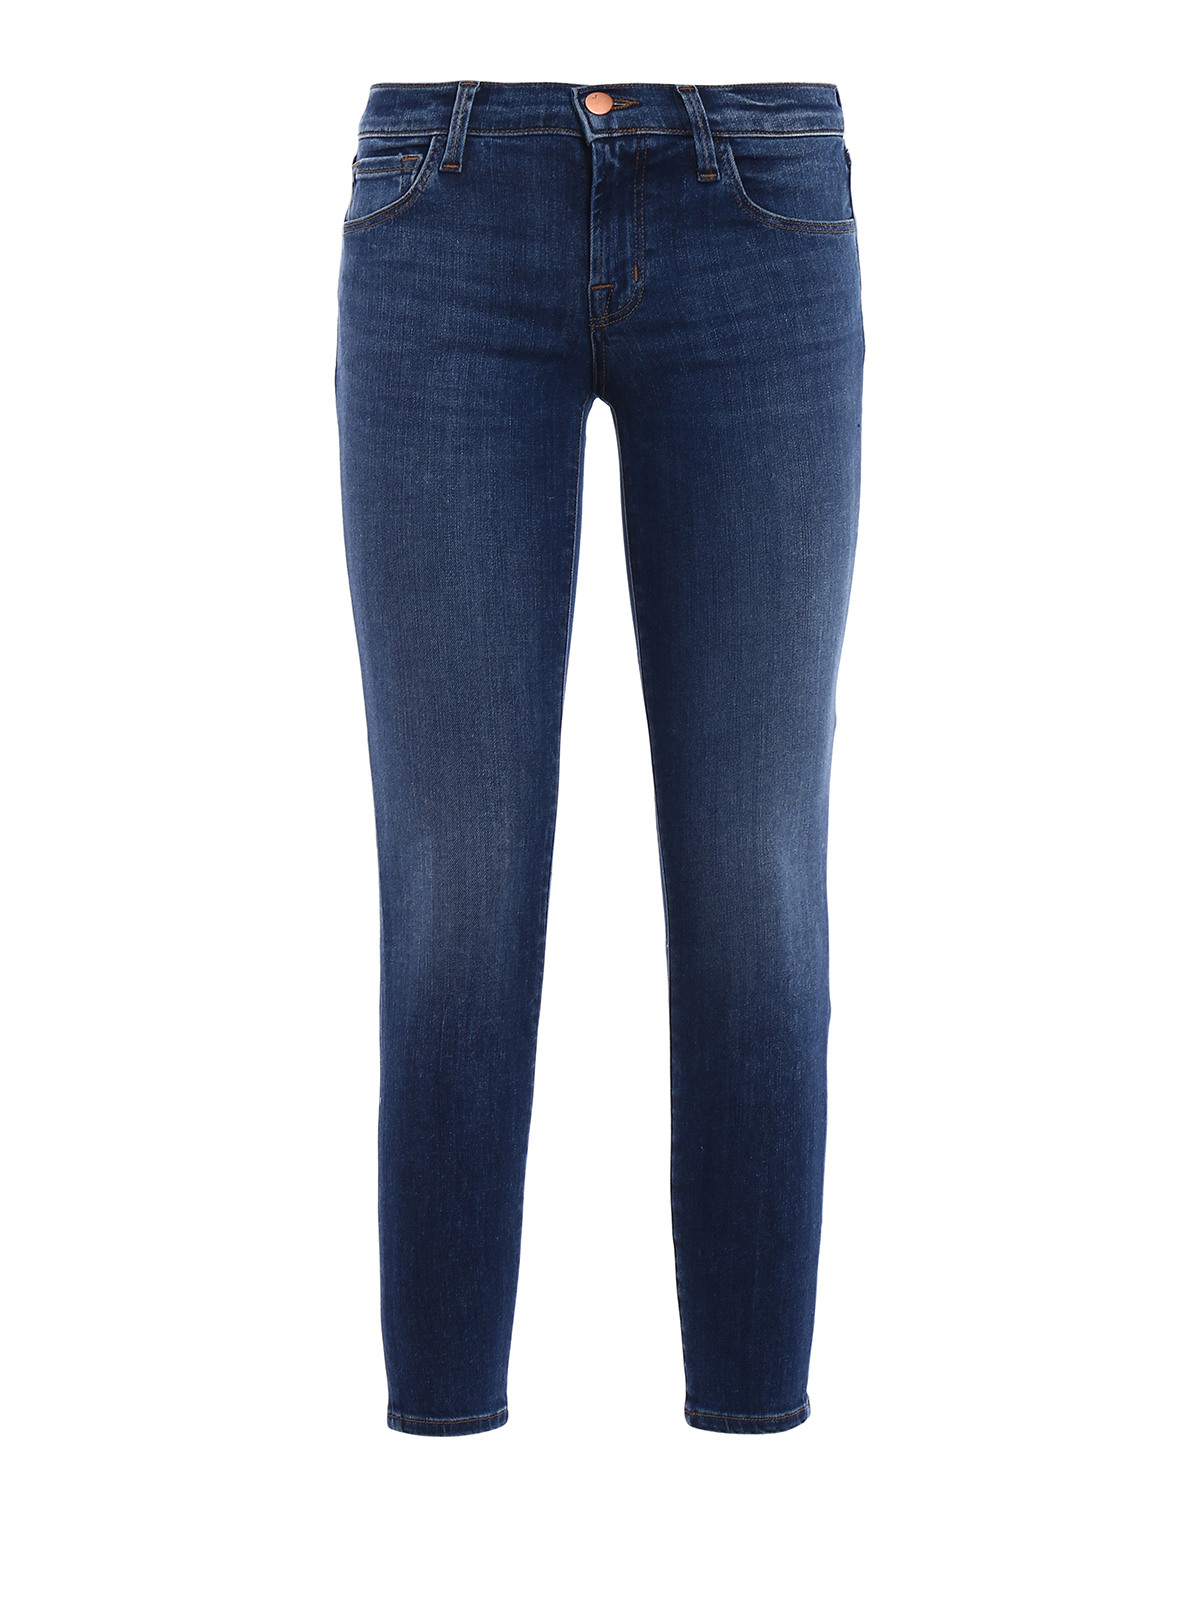 Skinny jeans J Brand - Super stretch denim skinny jeans - JB00096301